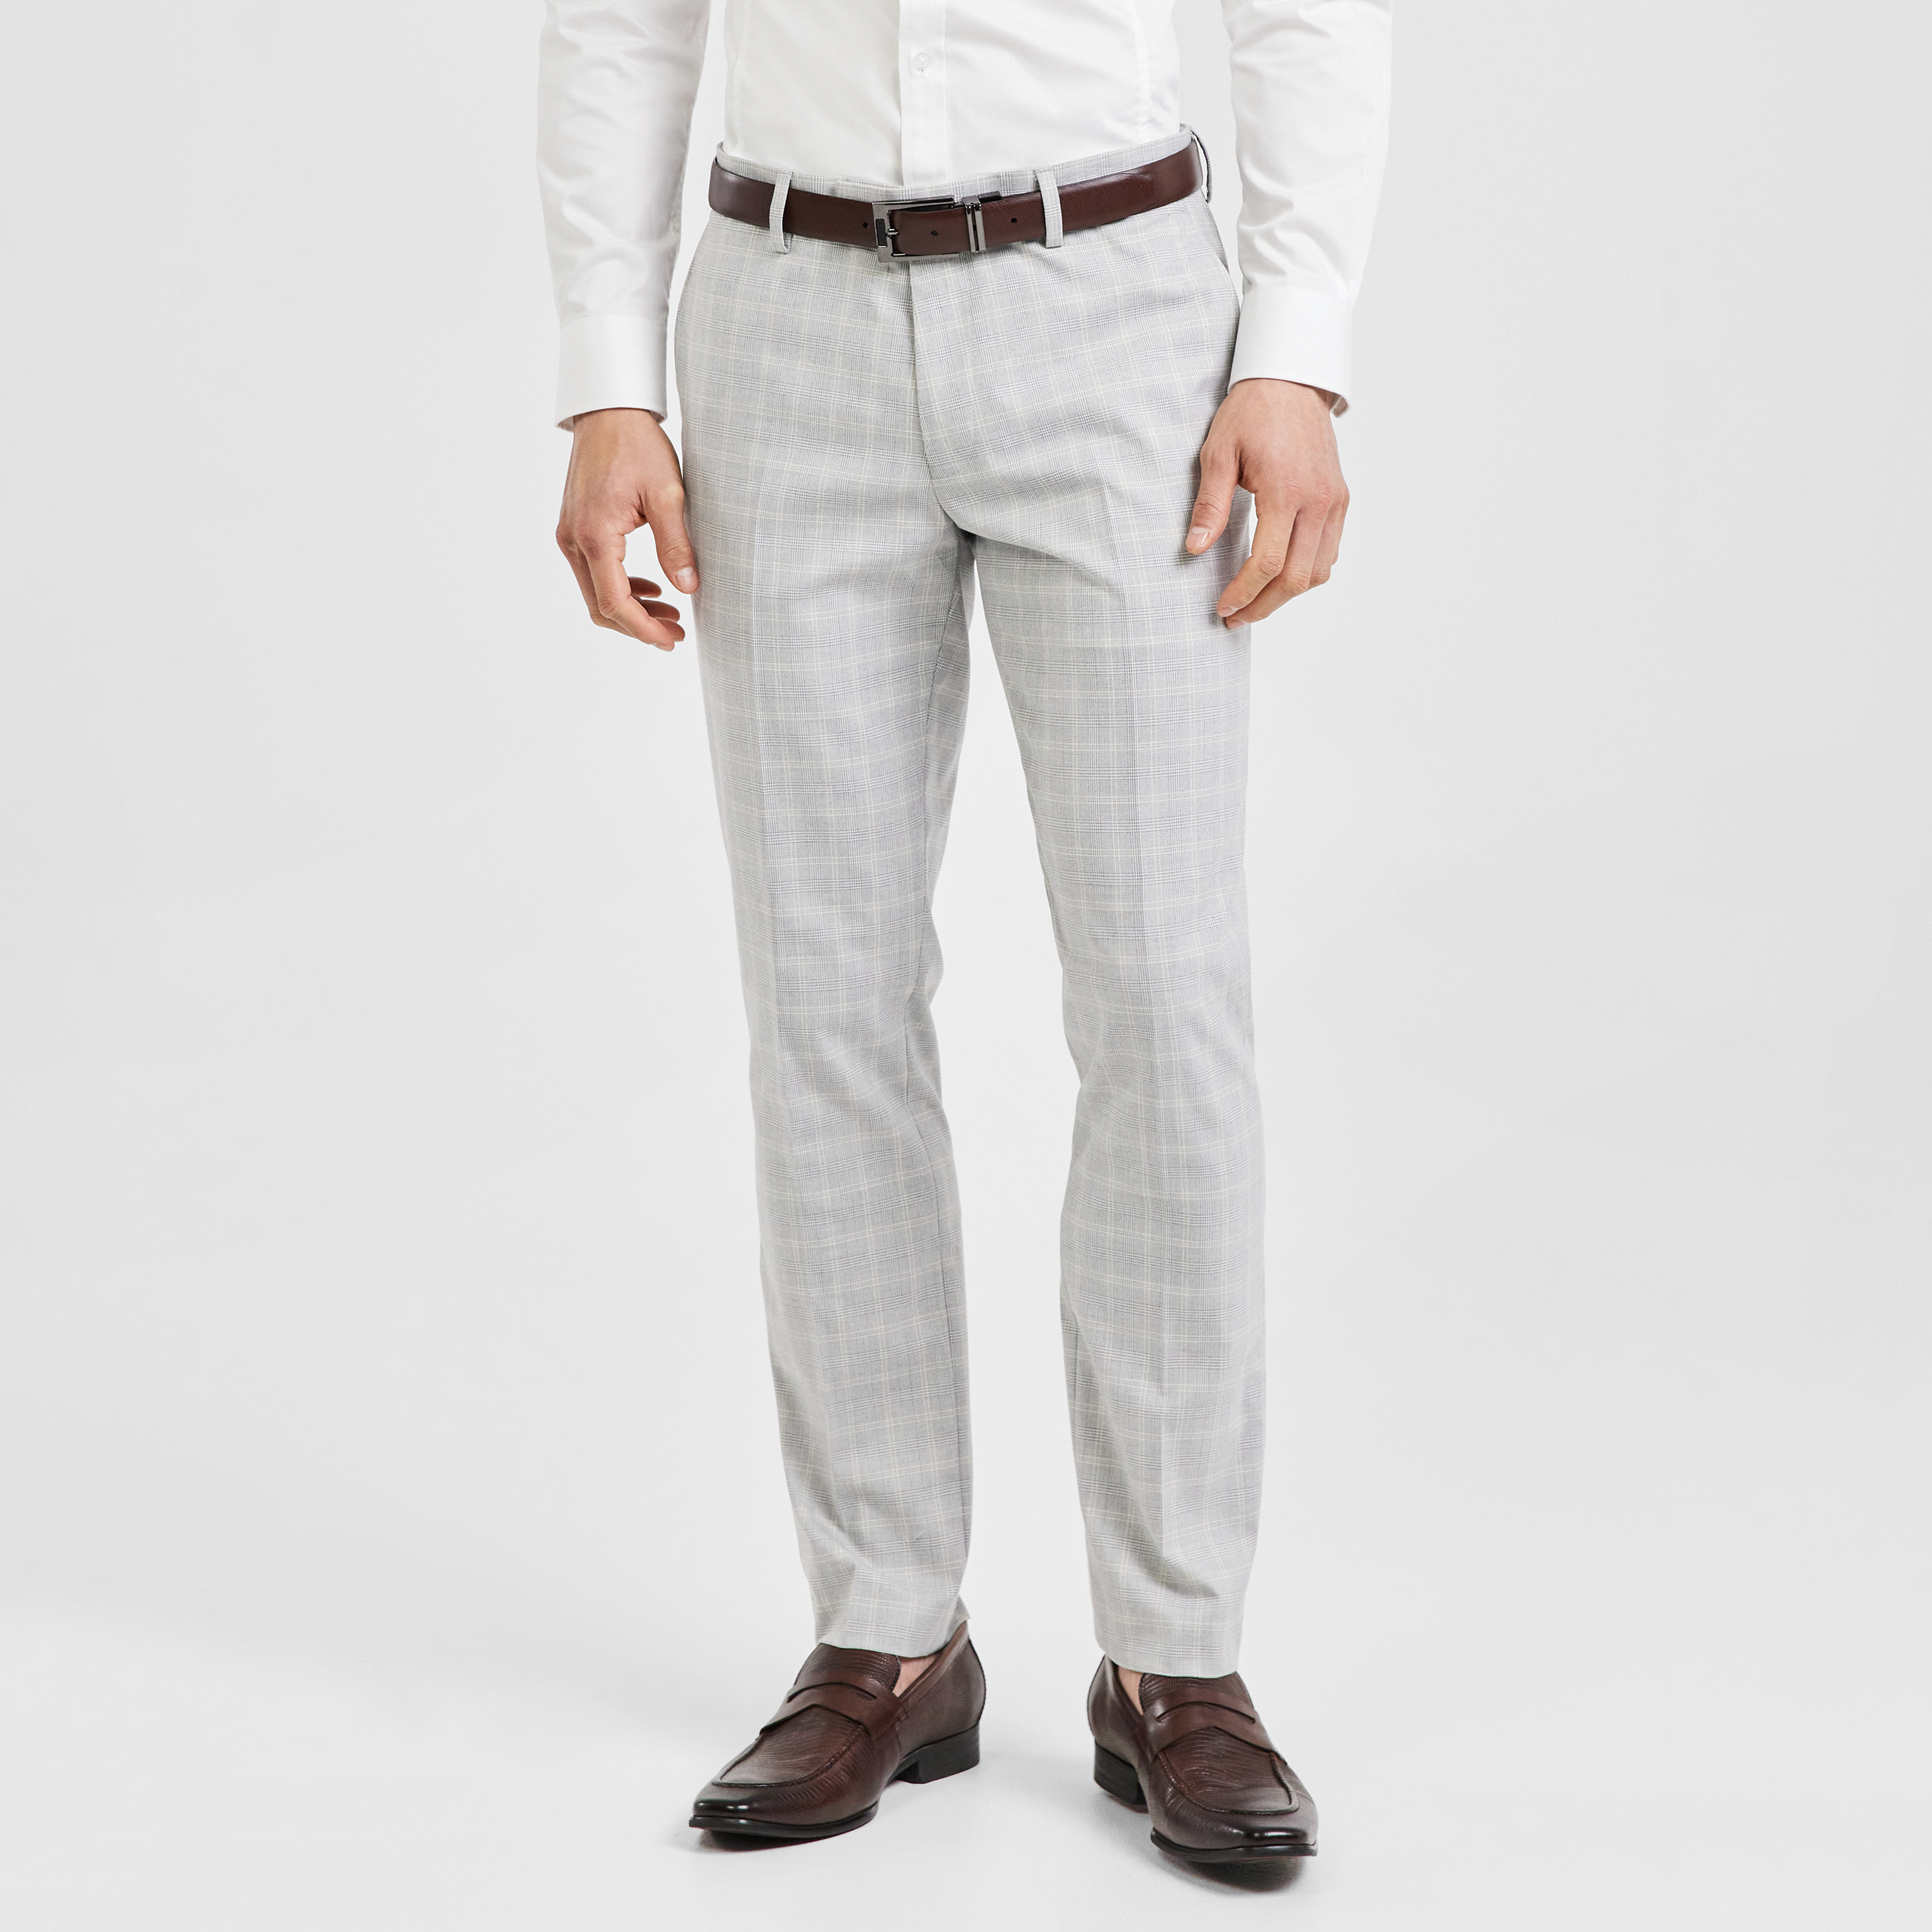 skpabo Men's Chino Slim Fit Striped Smart Wear Stretch Trousers Skinny  Suits Bottoms Casual Formal Pants Business Golf Dress Pants - Walmart.com